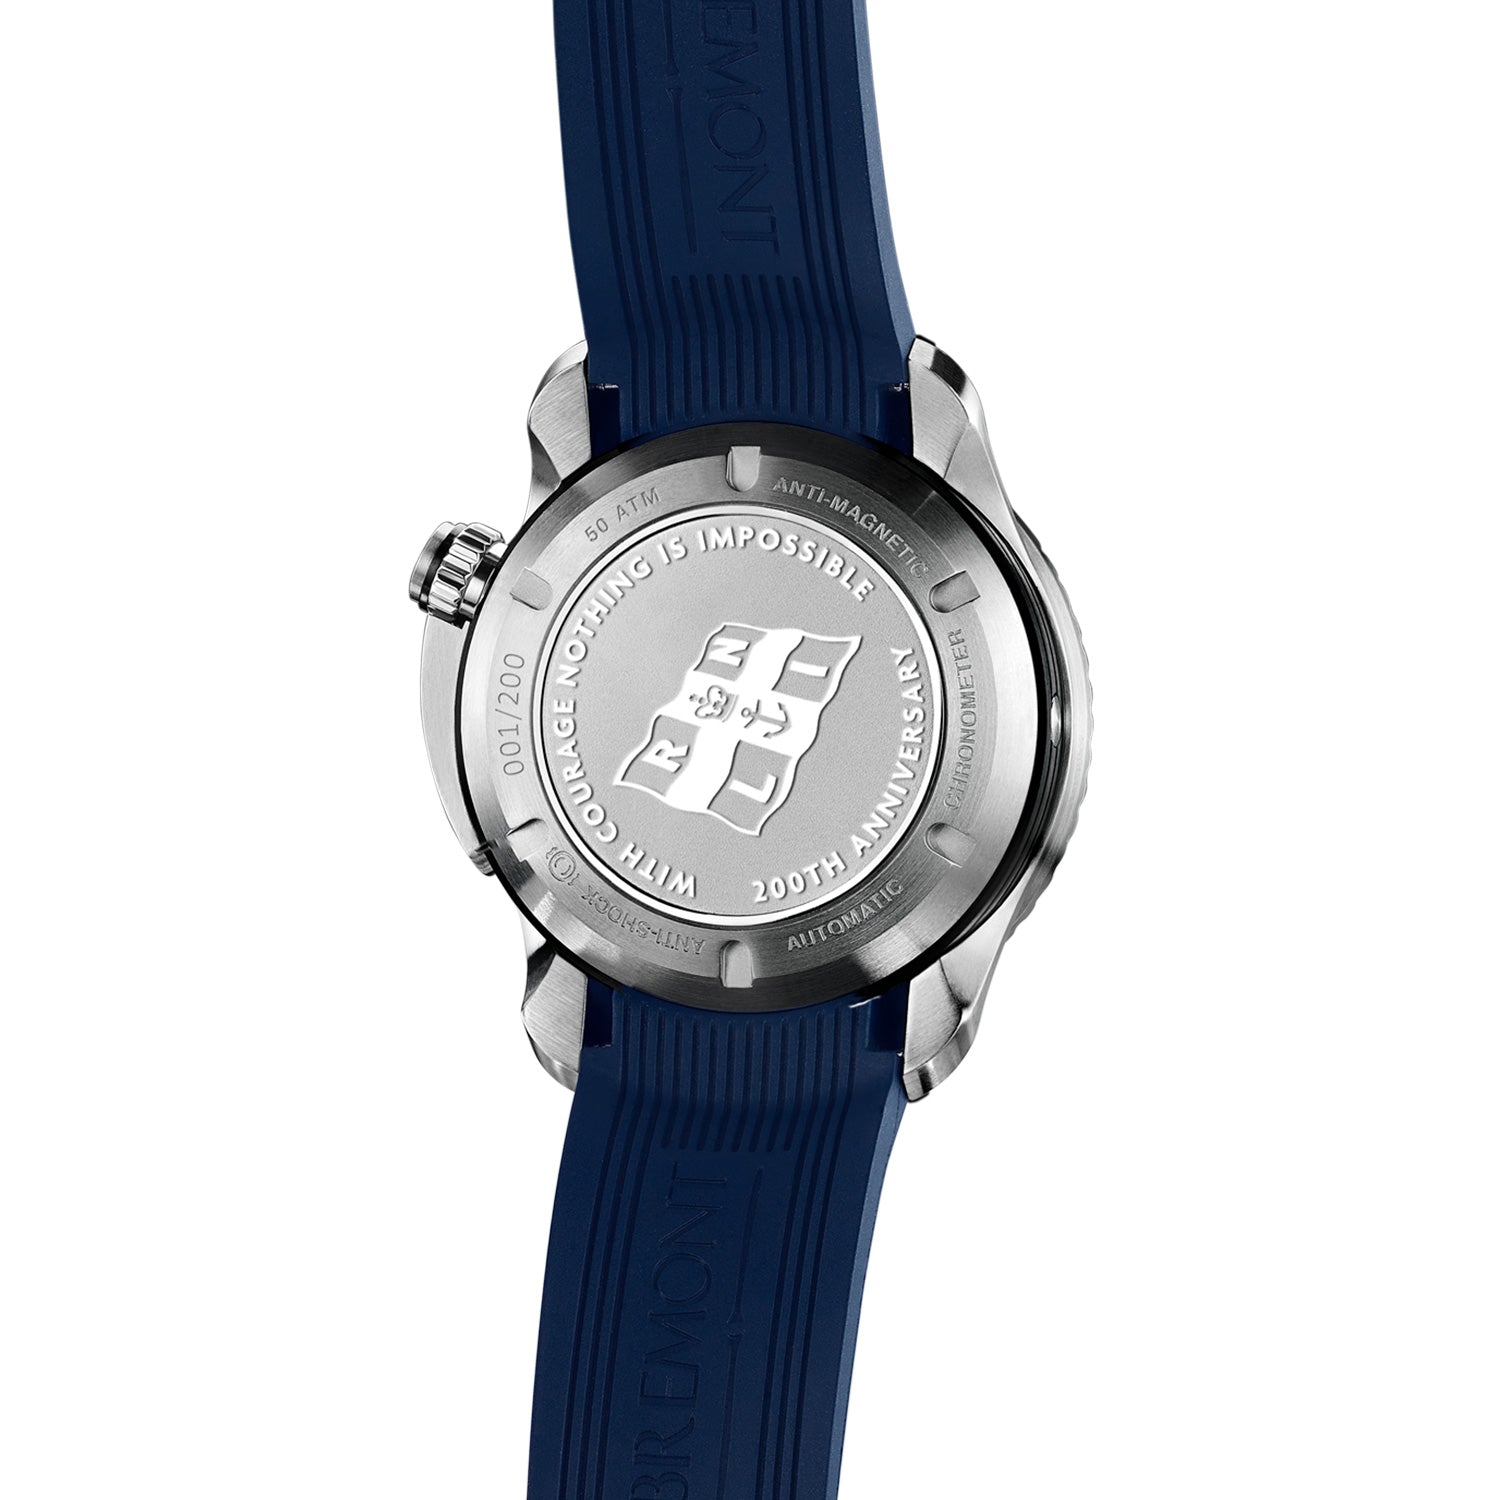 Bremont Watch Company Watches | Mens | Supermarine S500 RNLI